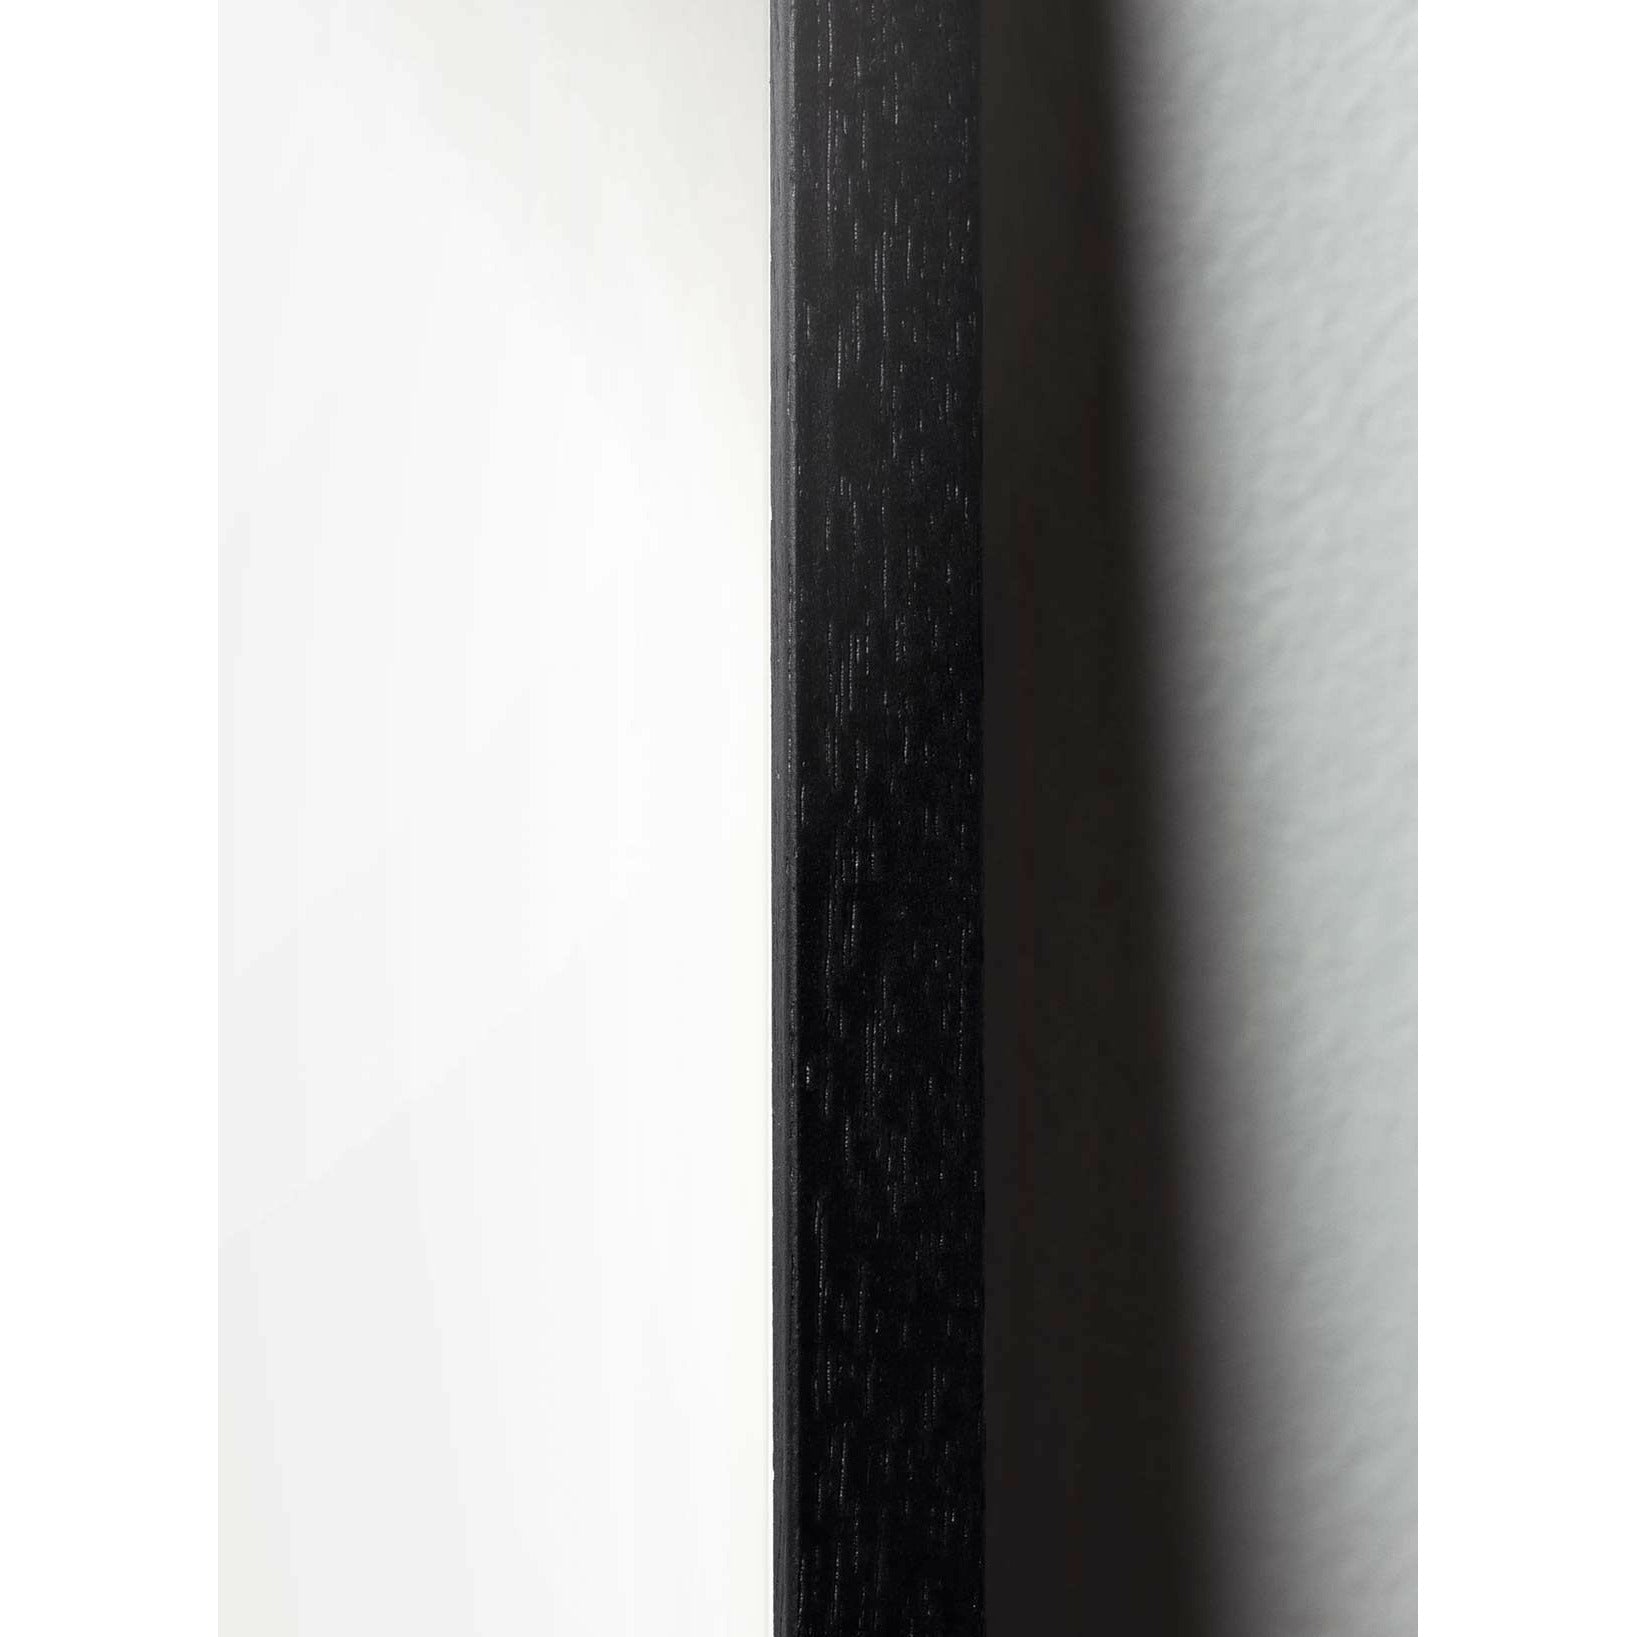 Brainchild Swan Parade Poster, Rahmen aus schwarz lackiertem Holz, 50 X70 cm